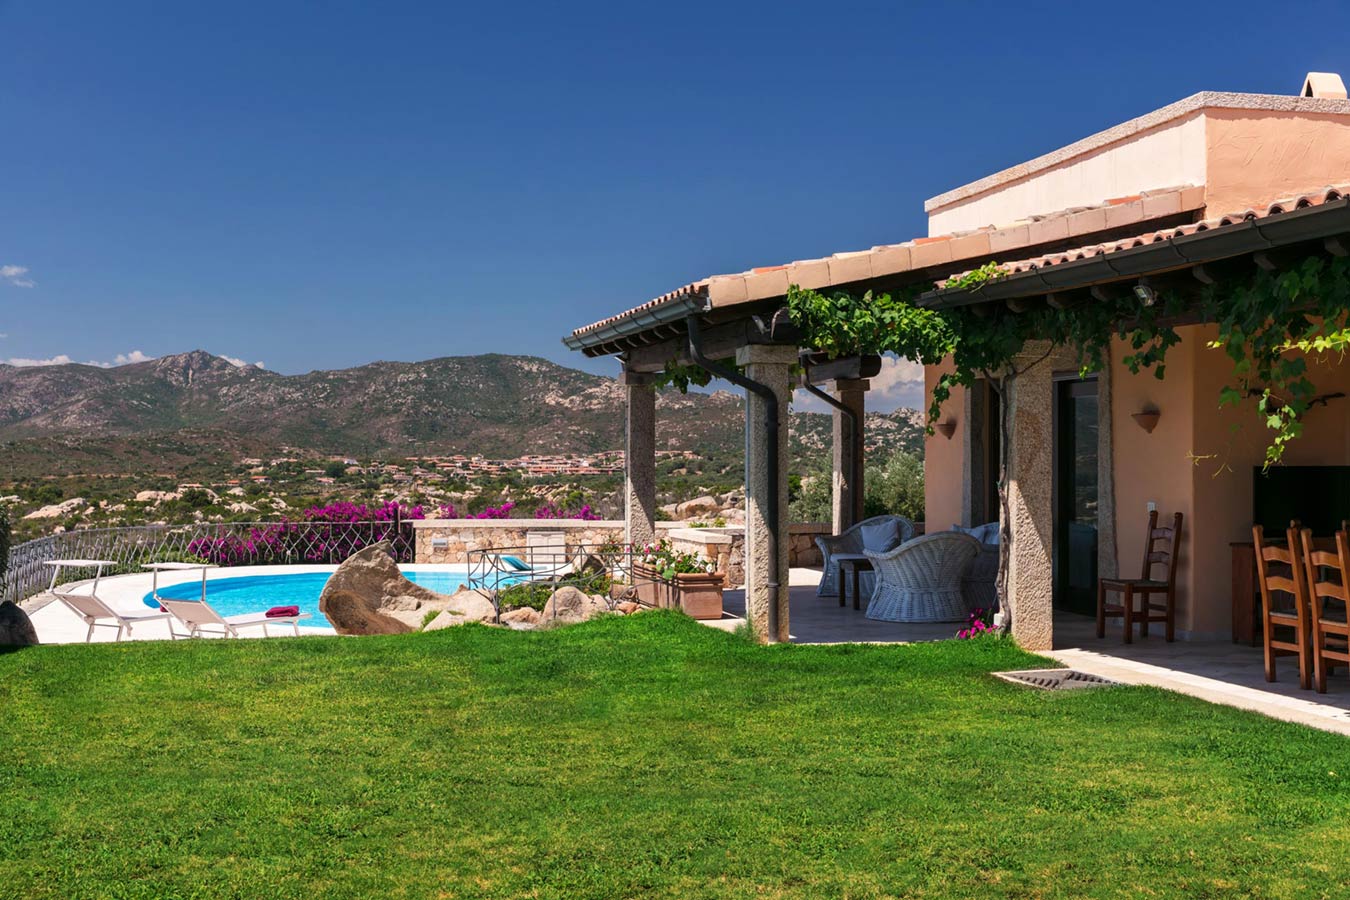 Villa Sarda - Mediterranien Real Estate with a swimming pool on Sardinia, Italia